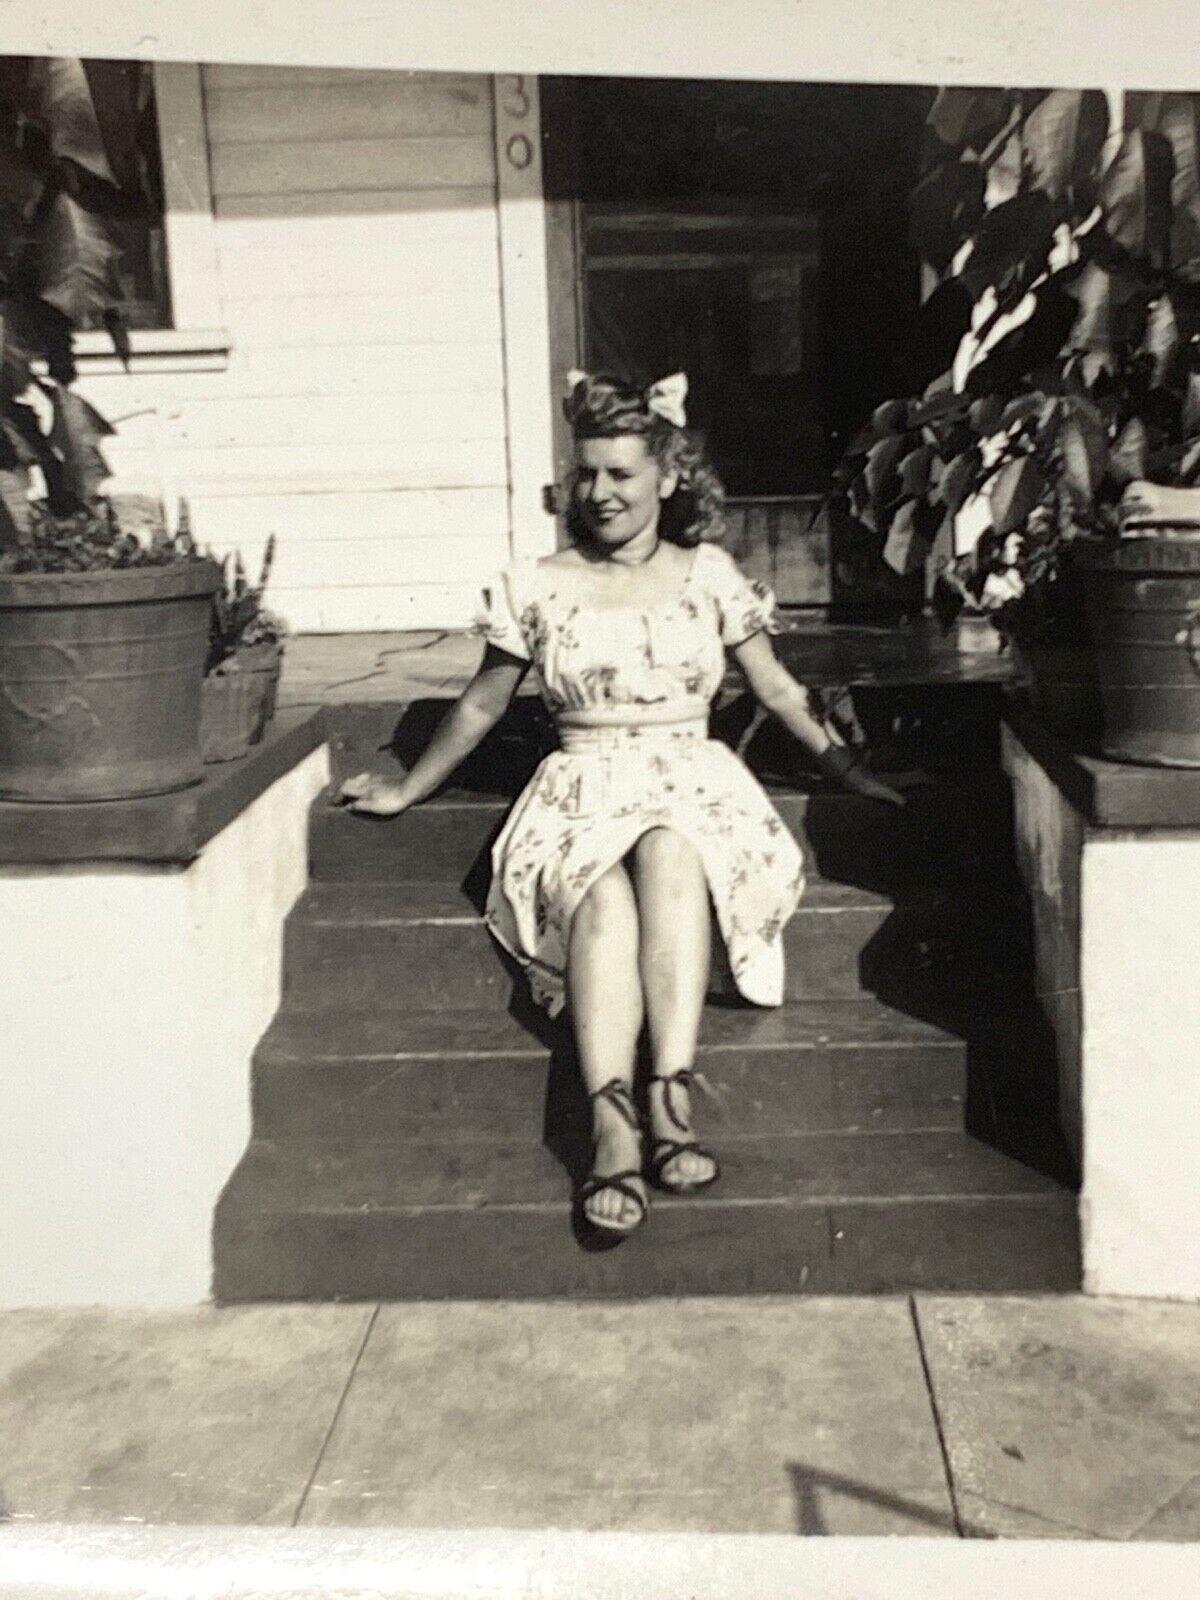 (AnA) FOUND Photo Photograph Pretty Woman Posing On Stairs White Dress Bow Hair